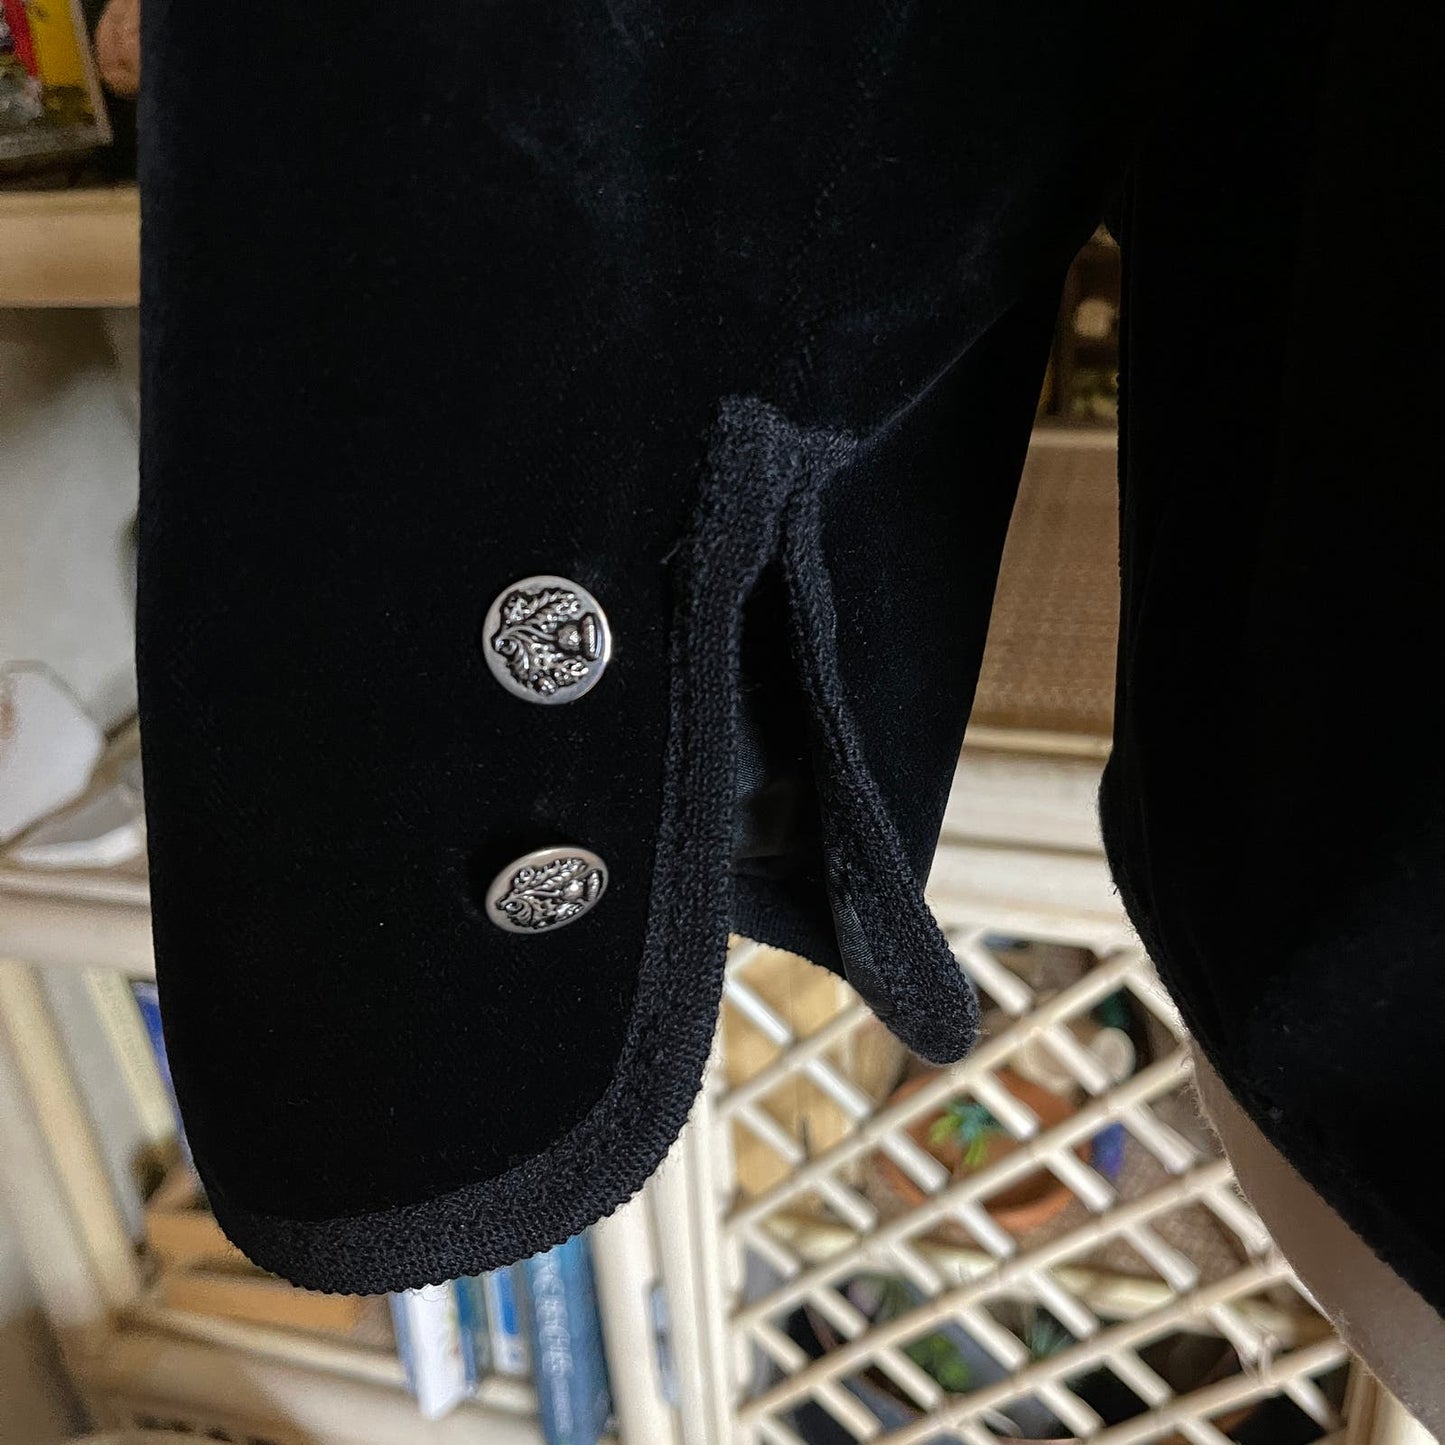 Vintage 80s Black Velvet Blazer jacket with Thistle Buttons Hidden Pockets Sz M